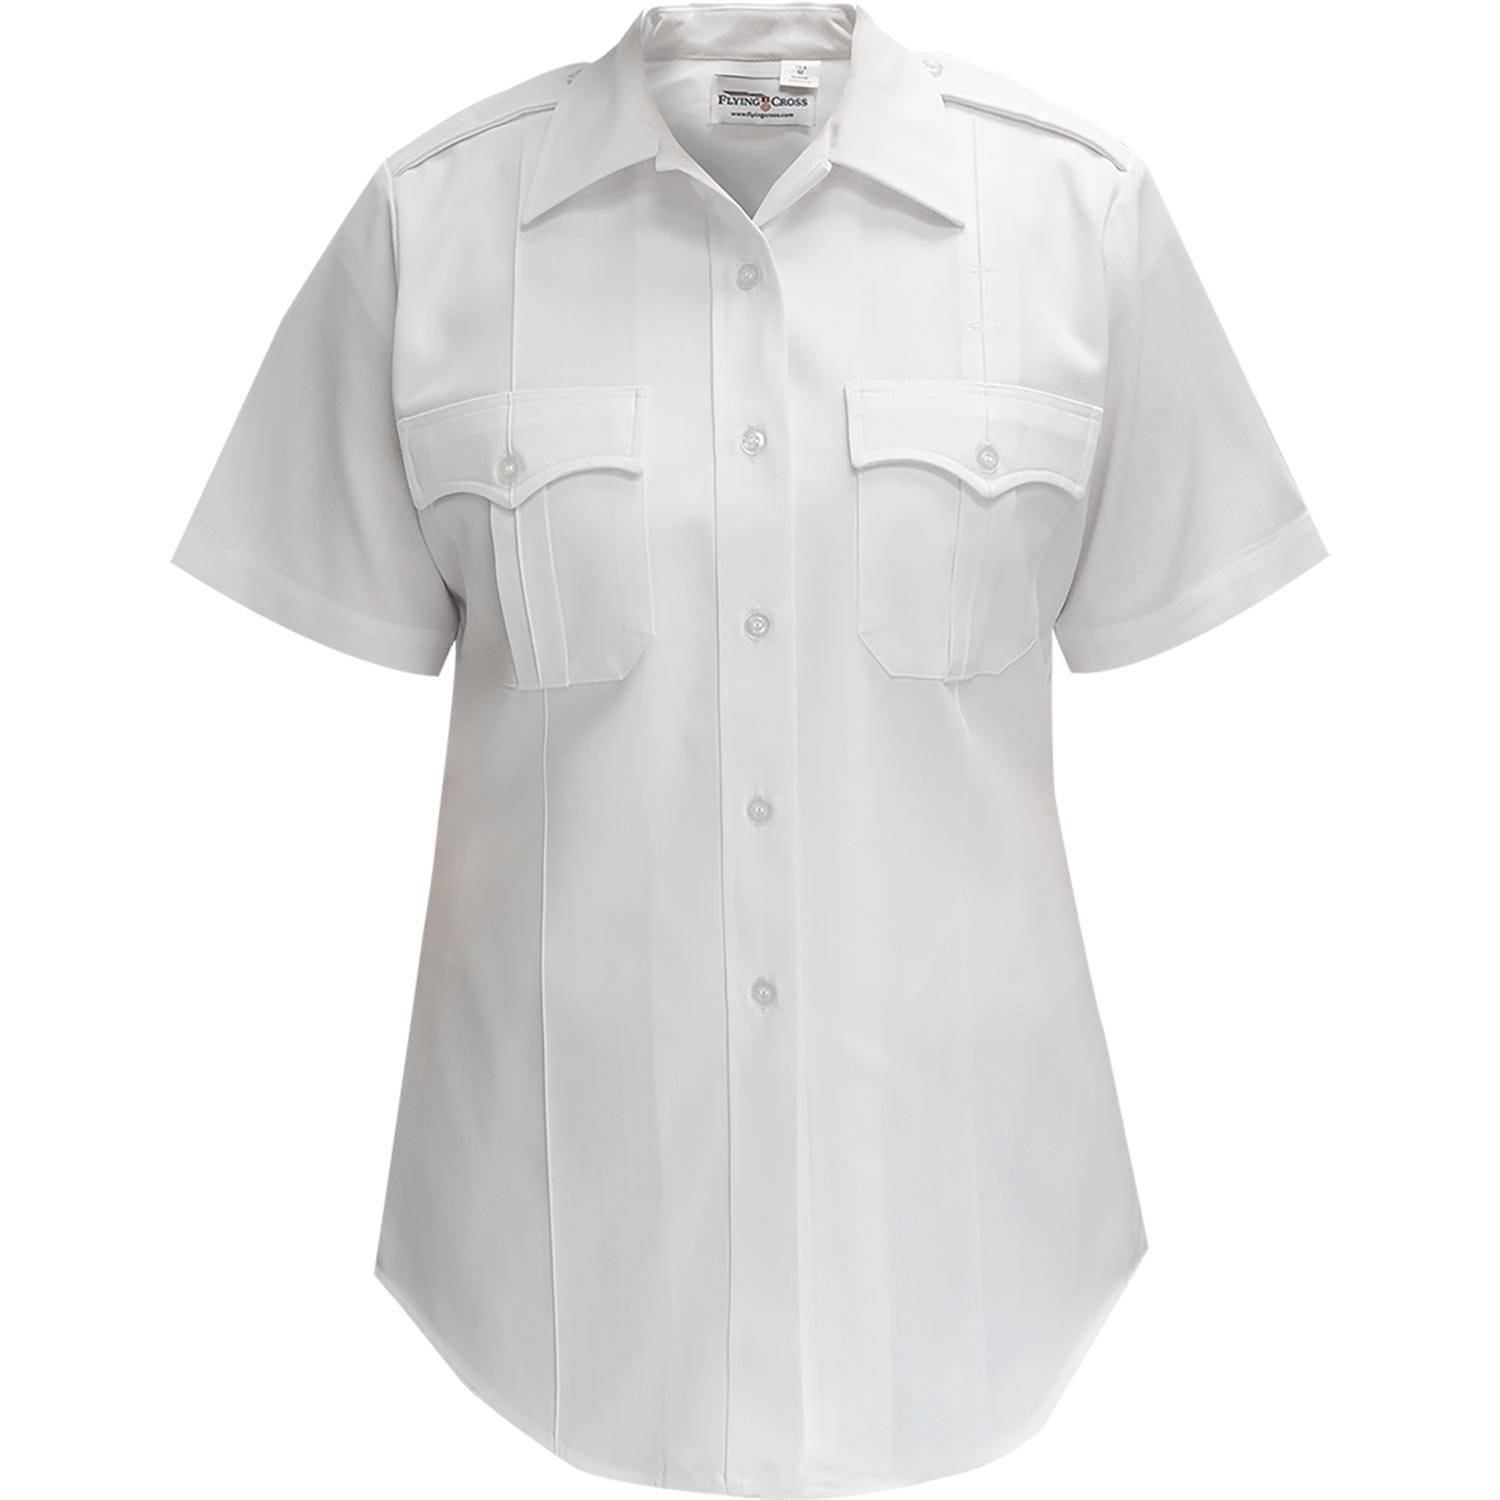 Flying Cross Women's Deluxe Tropical Weave Short-Sleeve Shir